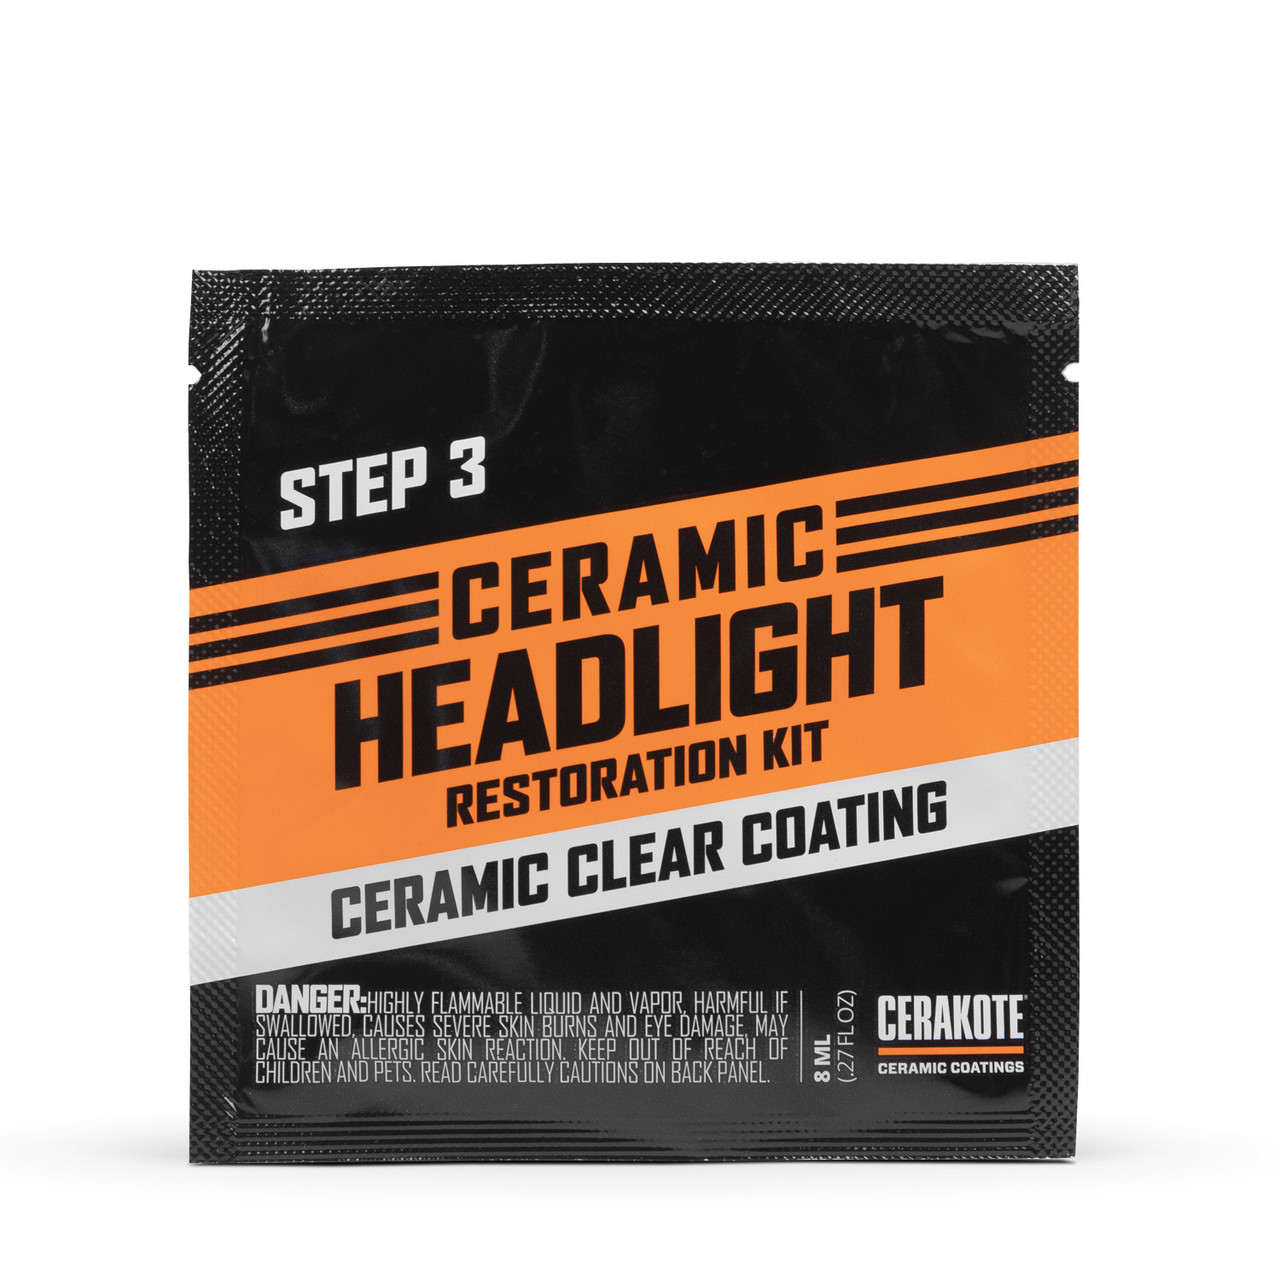 Cerakote Headlight Restoration